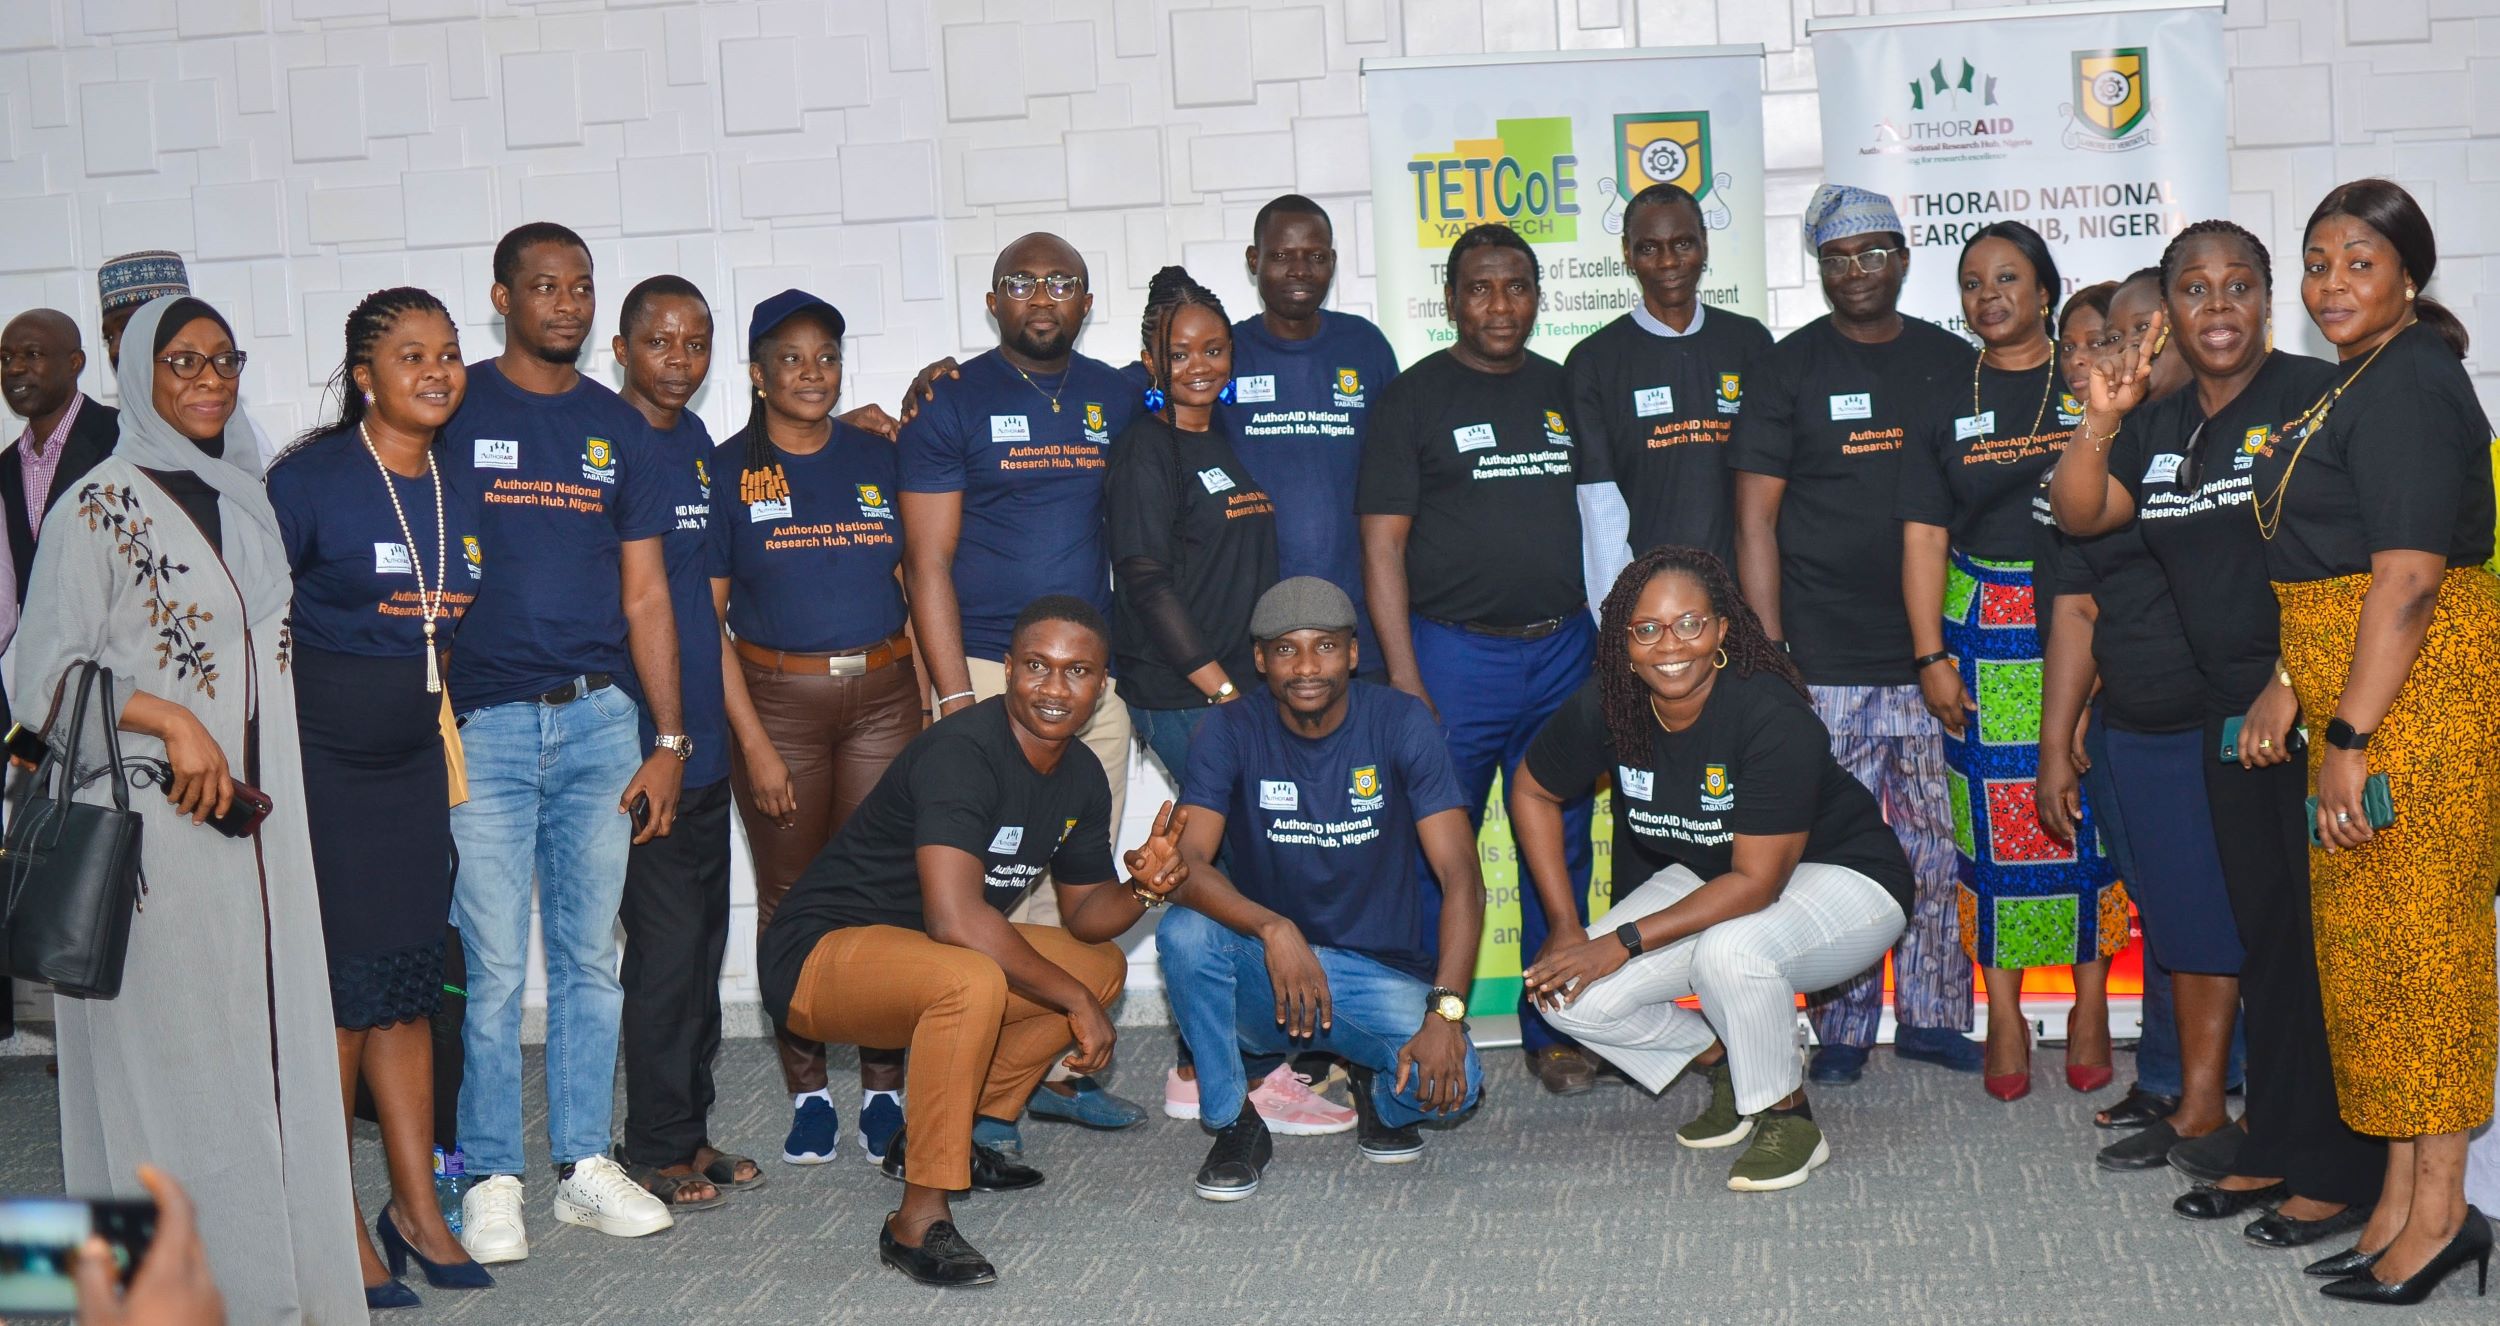 AuthorAID Nigeria hub pose for group photo